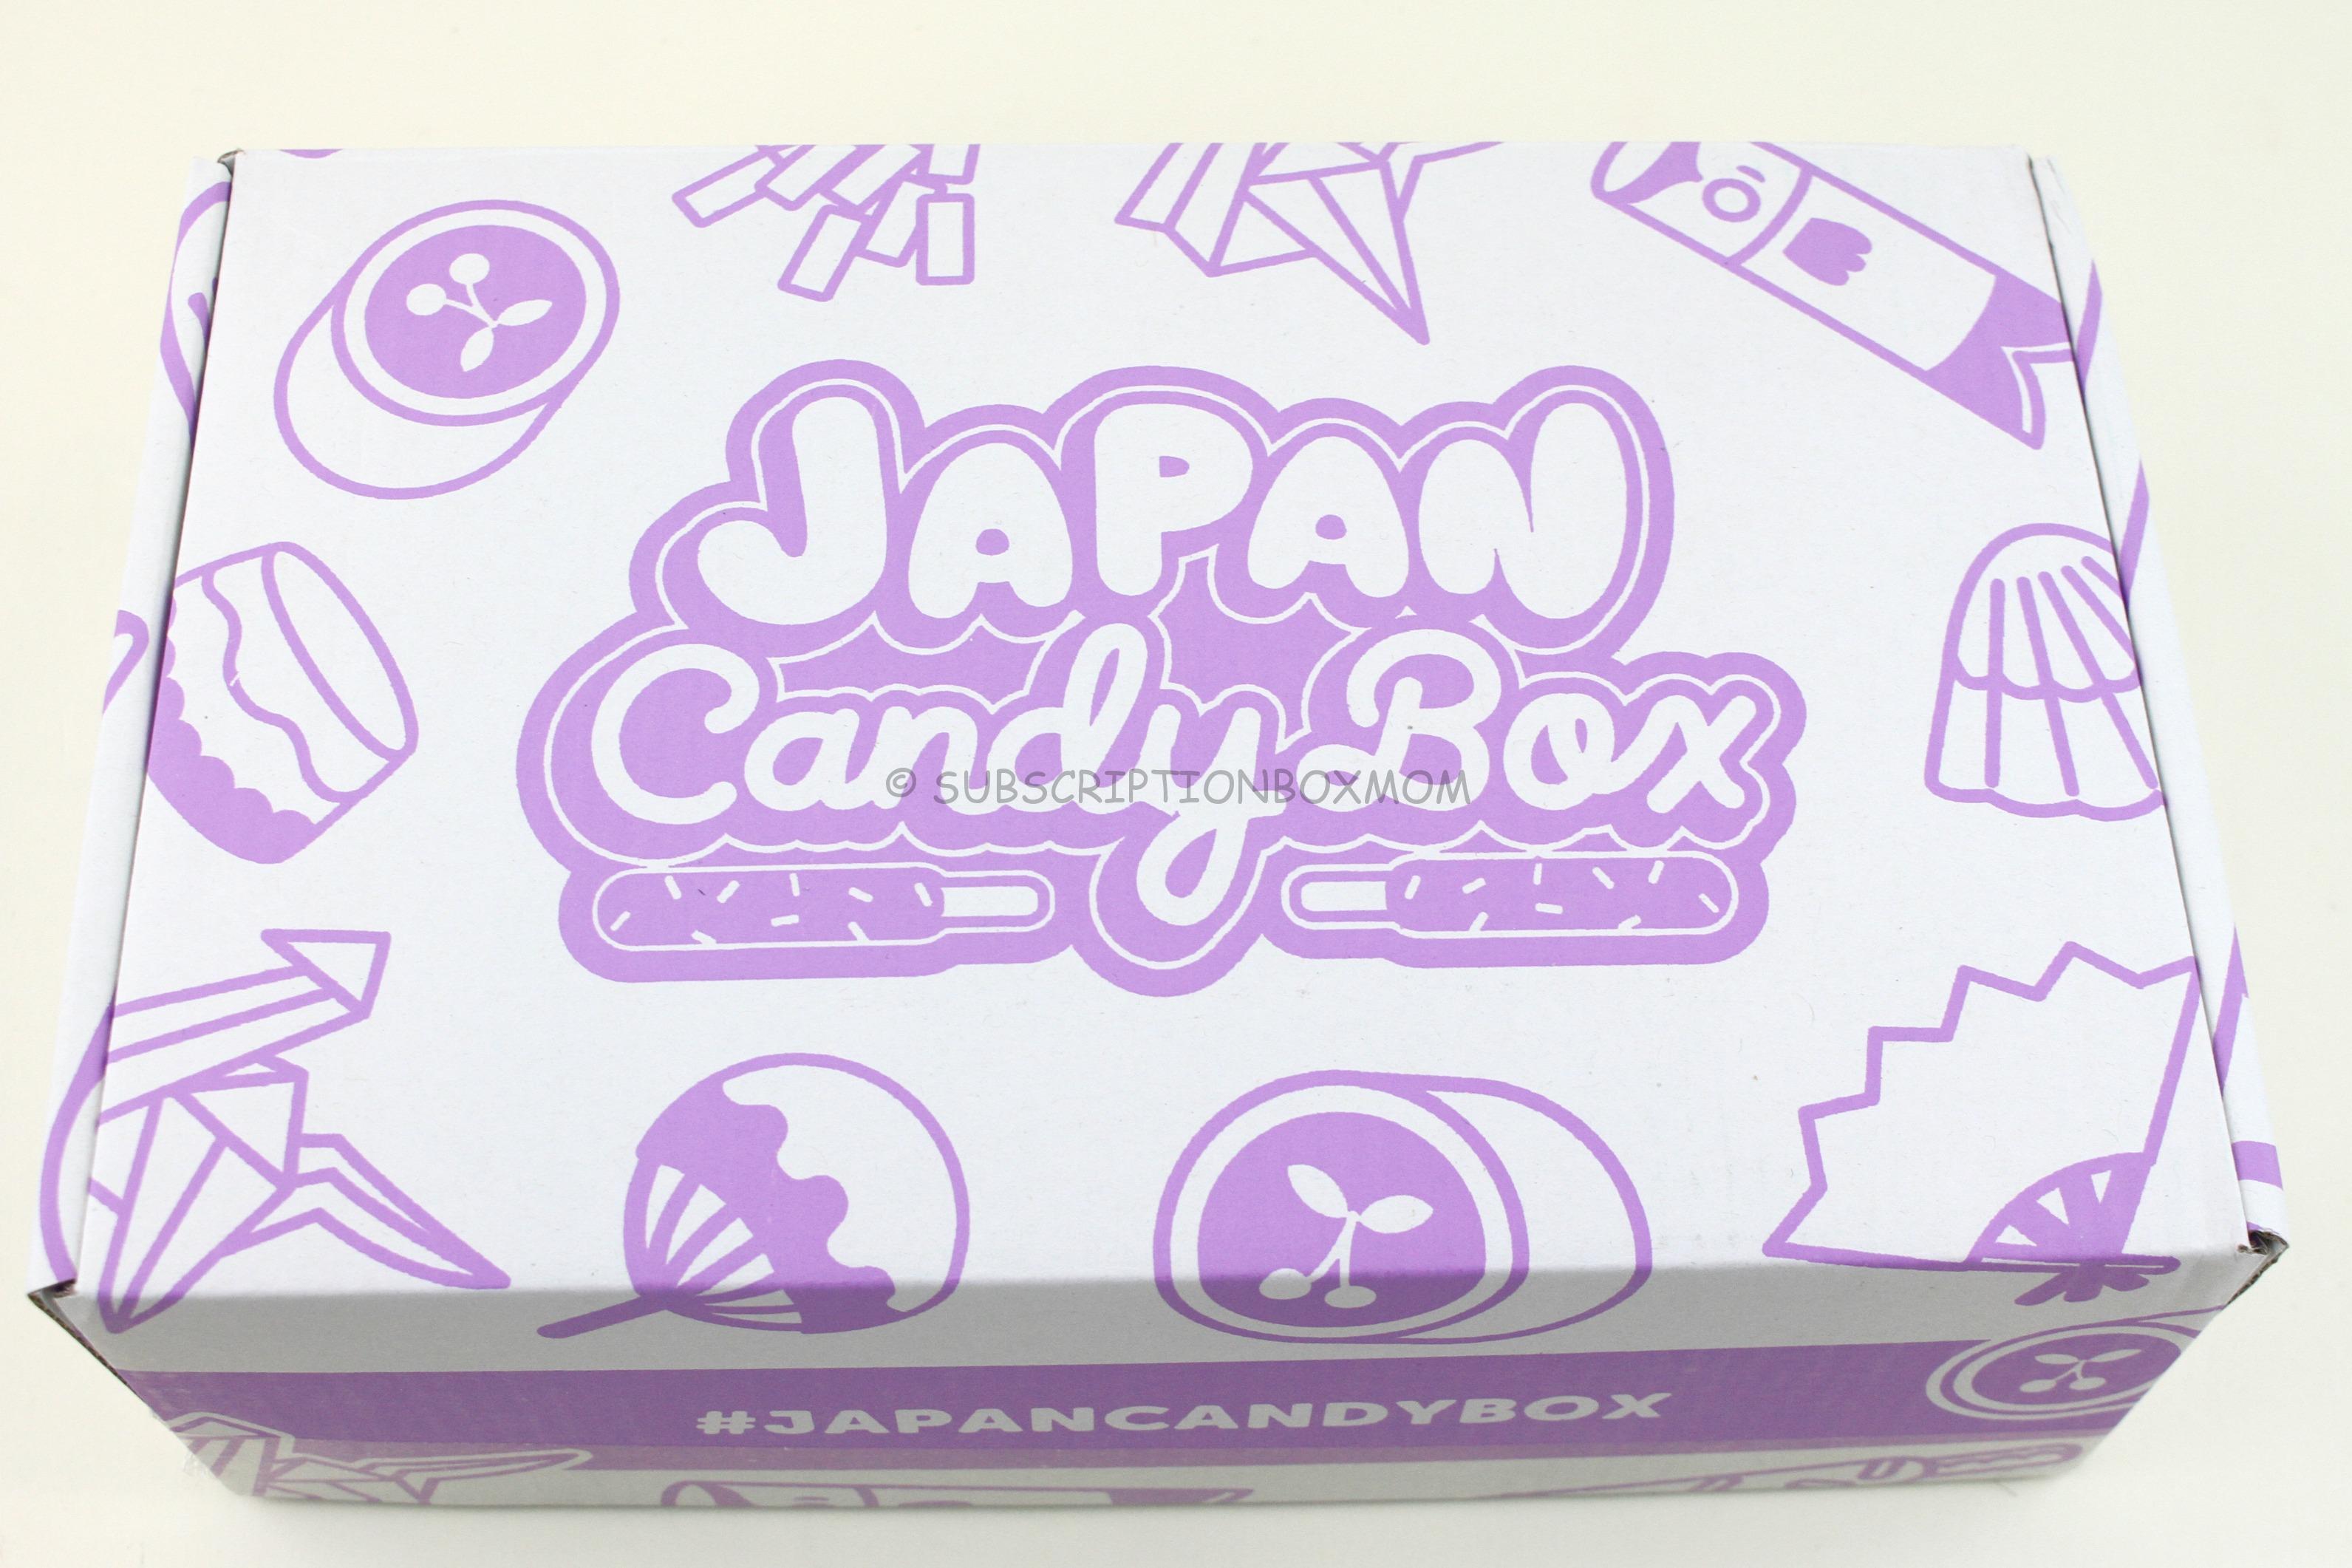 Mom's Japon Box - Momscandy